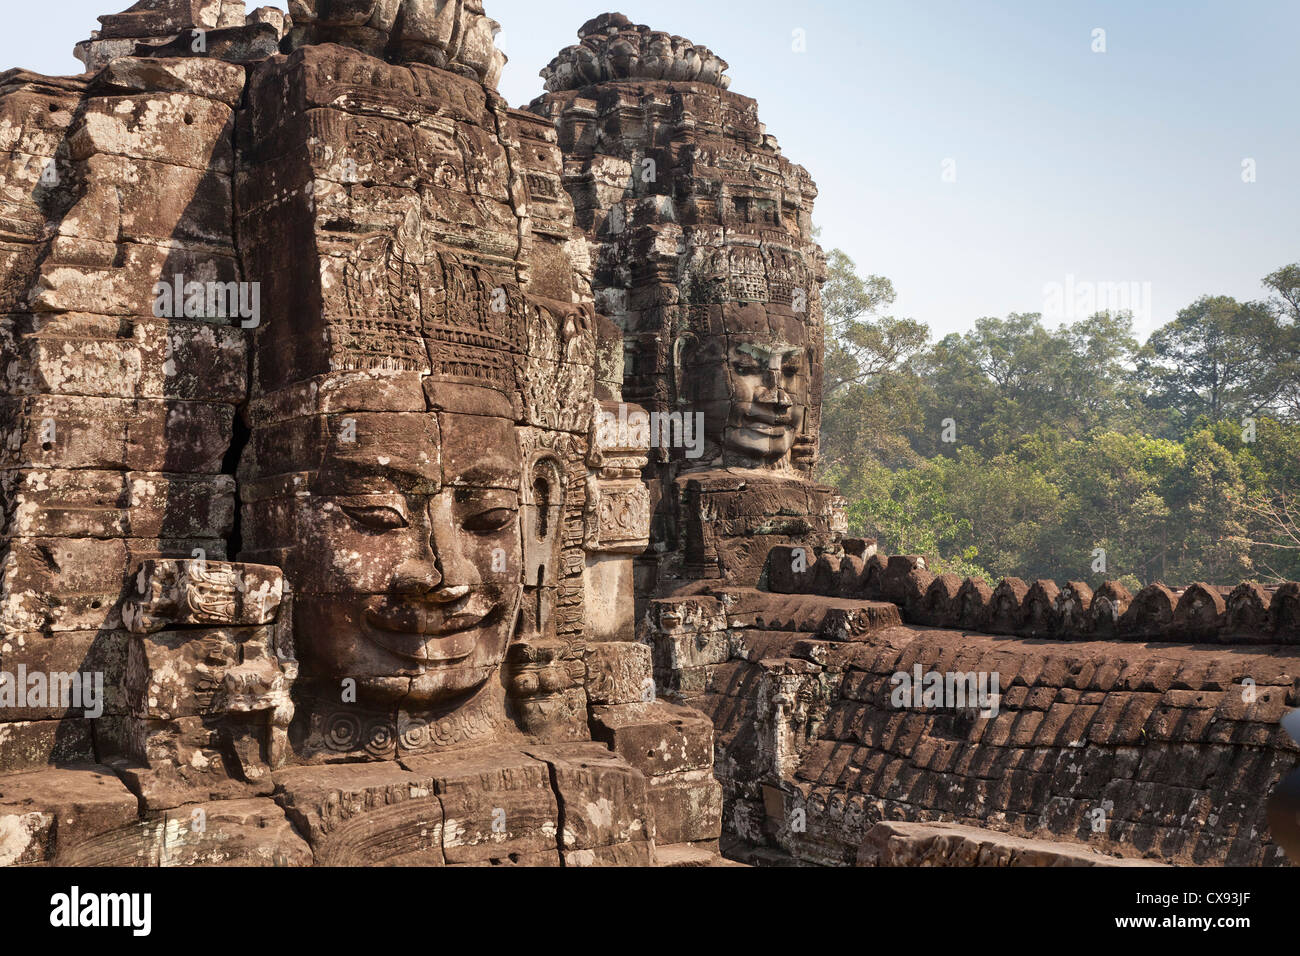 Angkor temple details, carvings, blocks, smiling faces at the Bayan temple, Angkor Thom, Cambodia Stock Photo